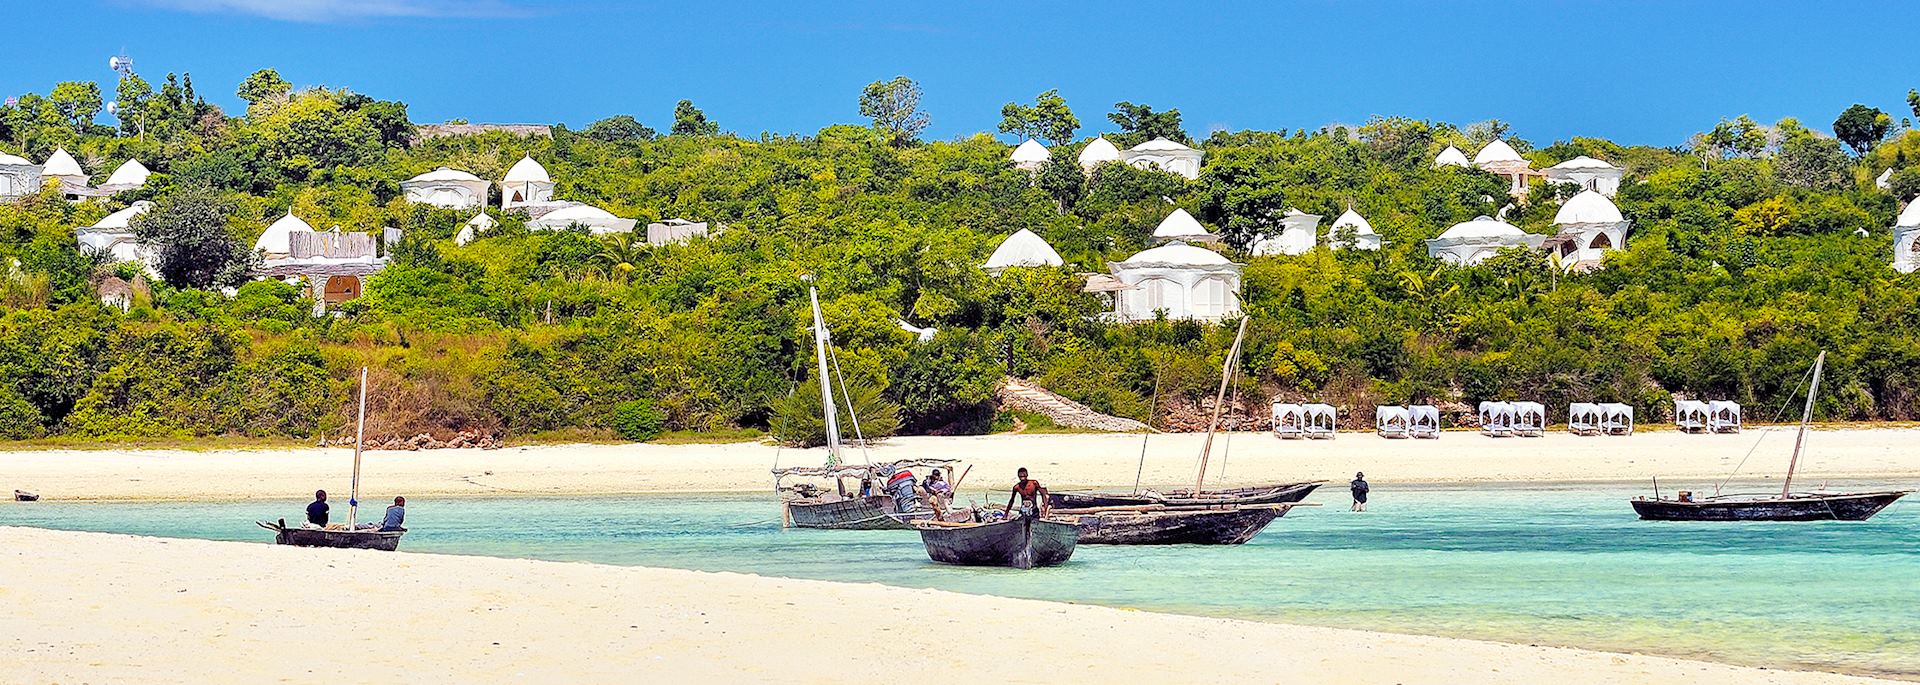 Kilindi, Zanzibar Island